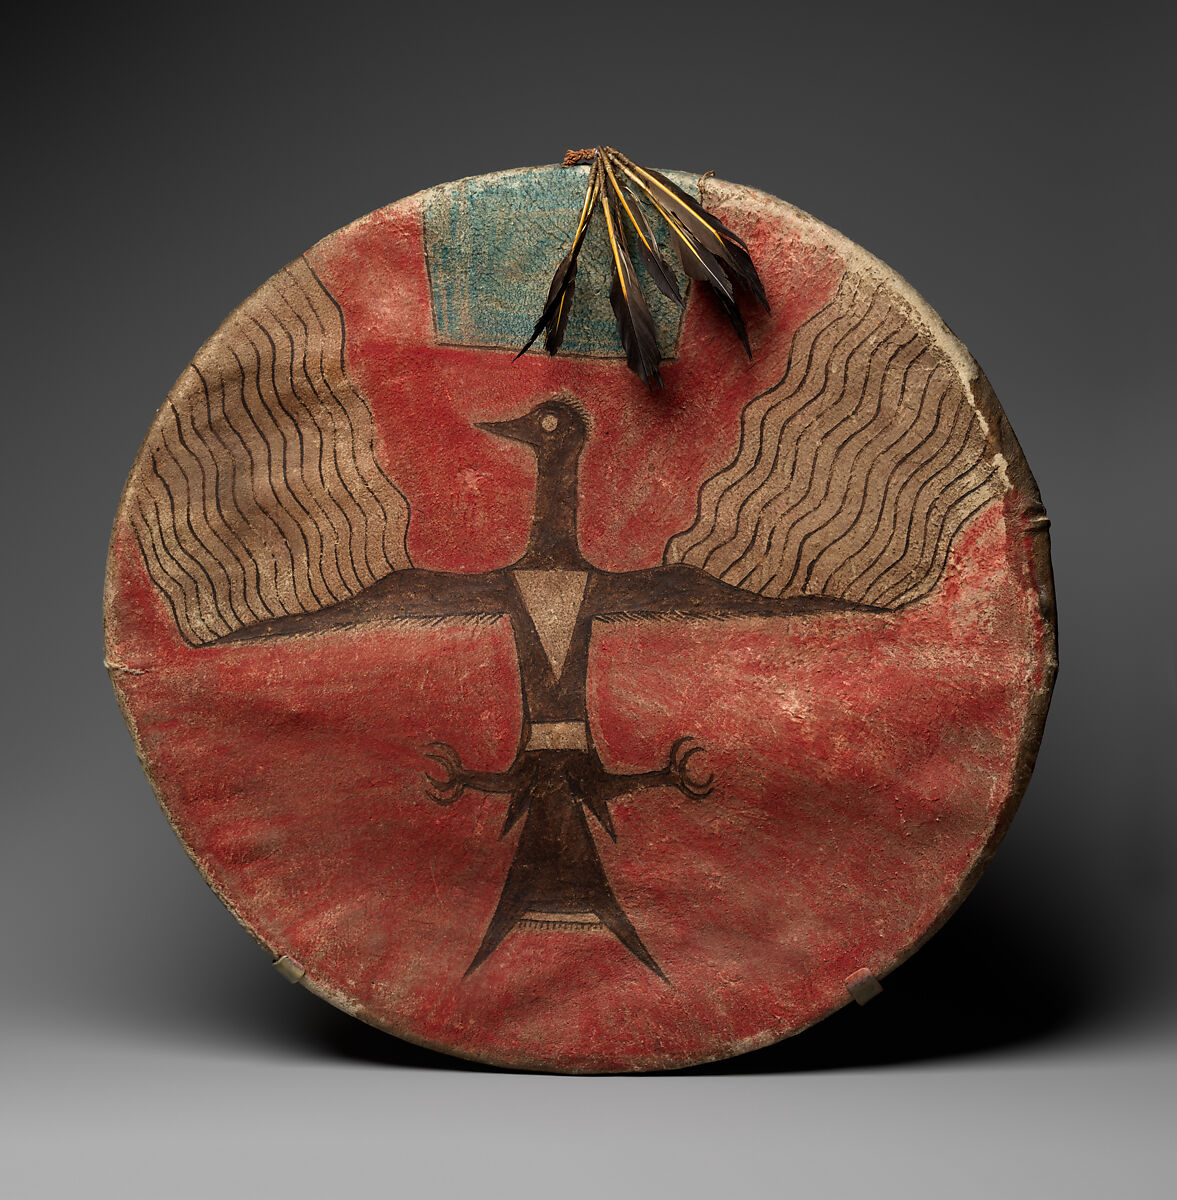 Shield, He Nupa Wanica/ Joseph No Two Horns (Hunkpapa Lakota/ Teton Sioux, 1852–1942), Tanned leather, pigment, wood, and feathers, Hunkpapa Lakota/ Teton Sioux, Native American 